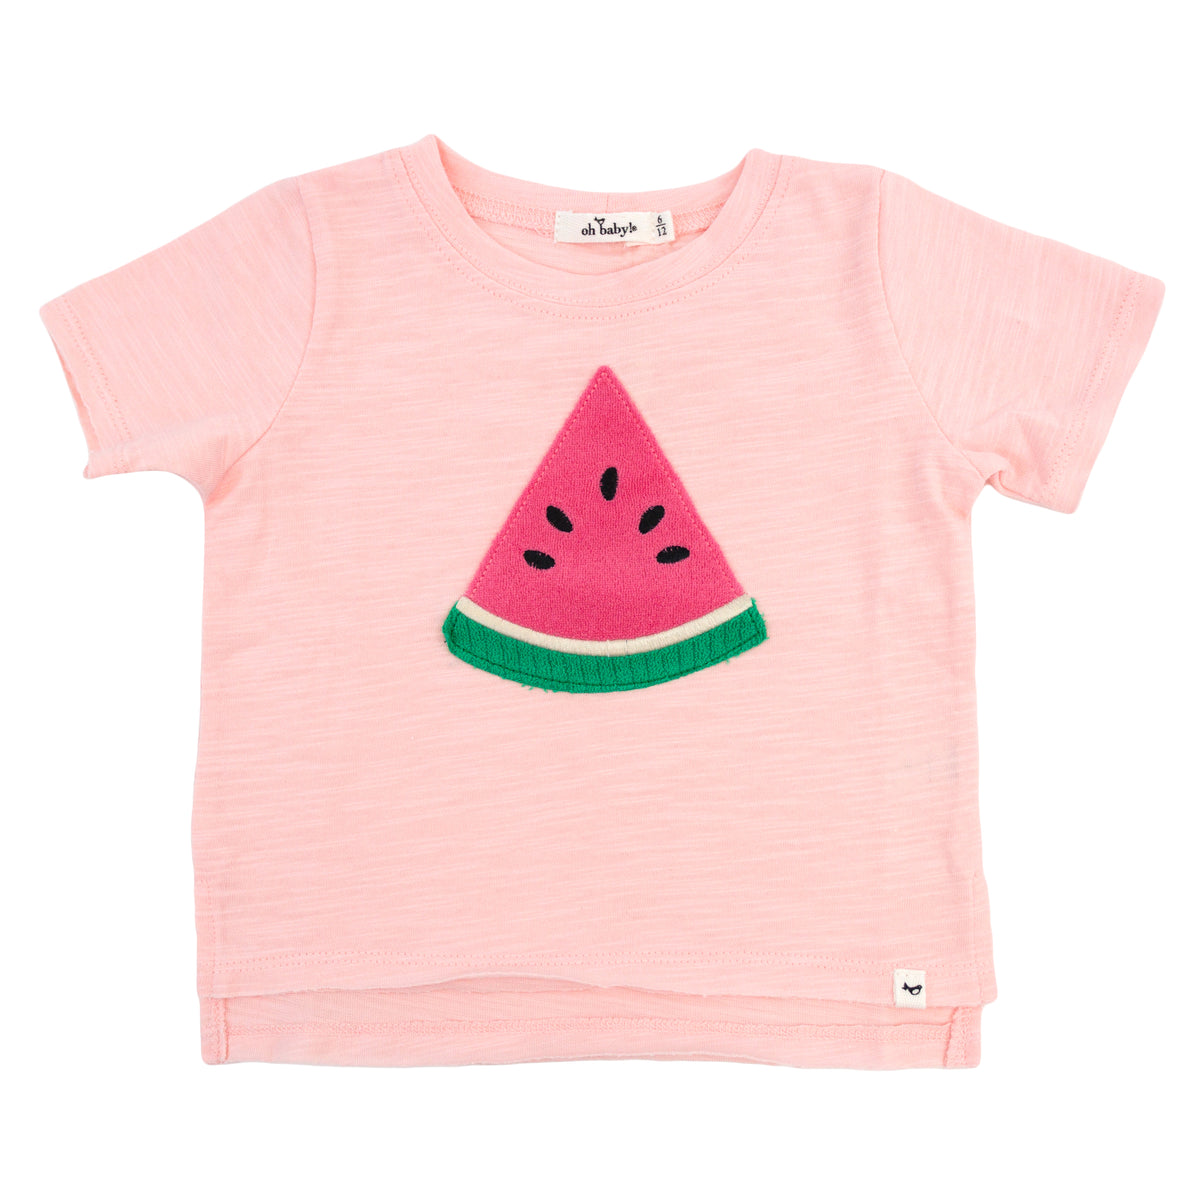 oh baby! Raw Edge Short Sleeve Cotton Slub Tee -Watermelon Applique- Pale Pink